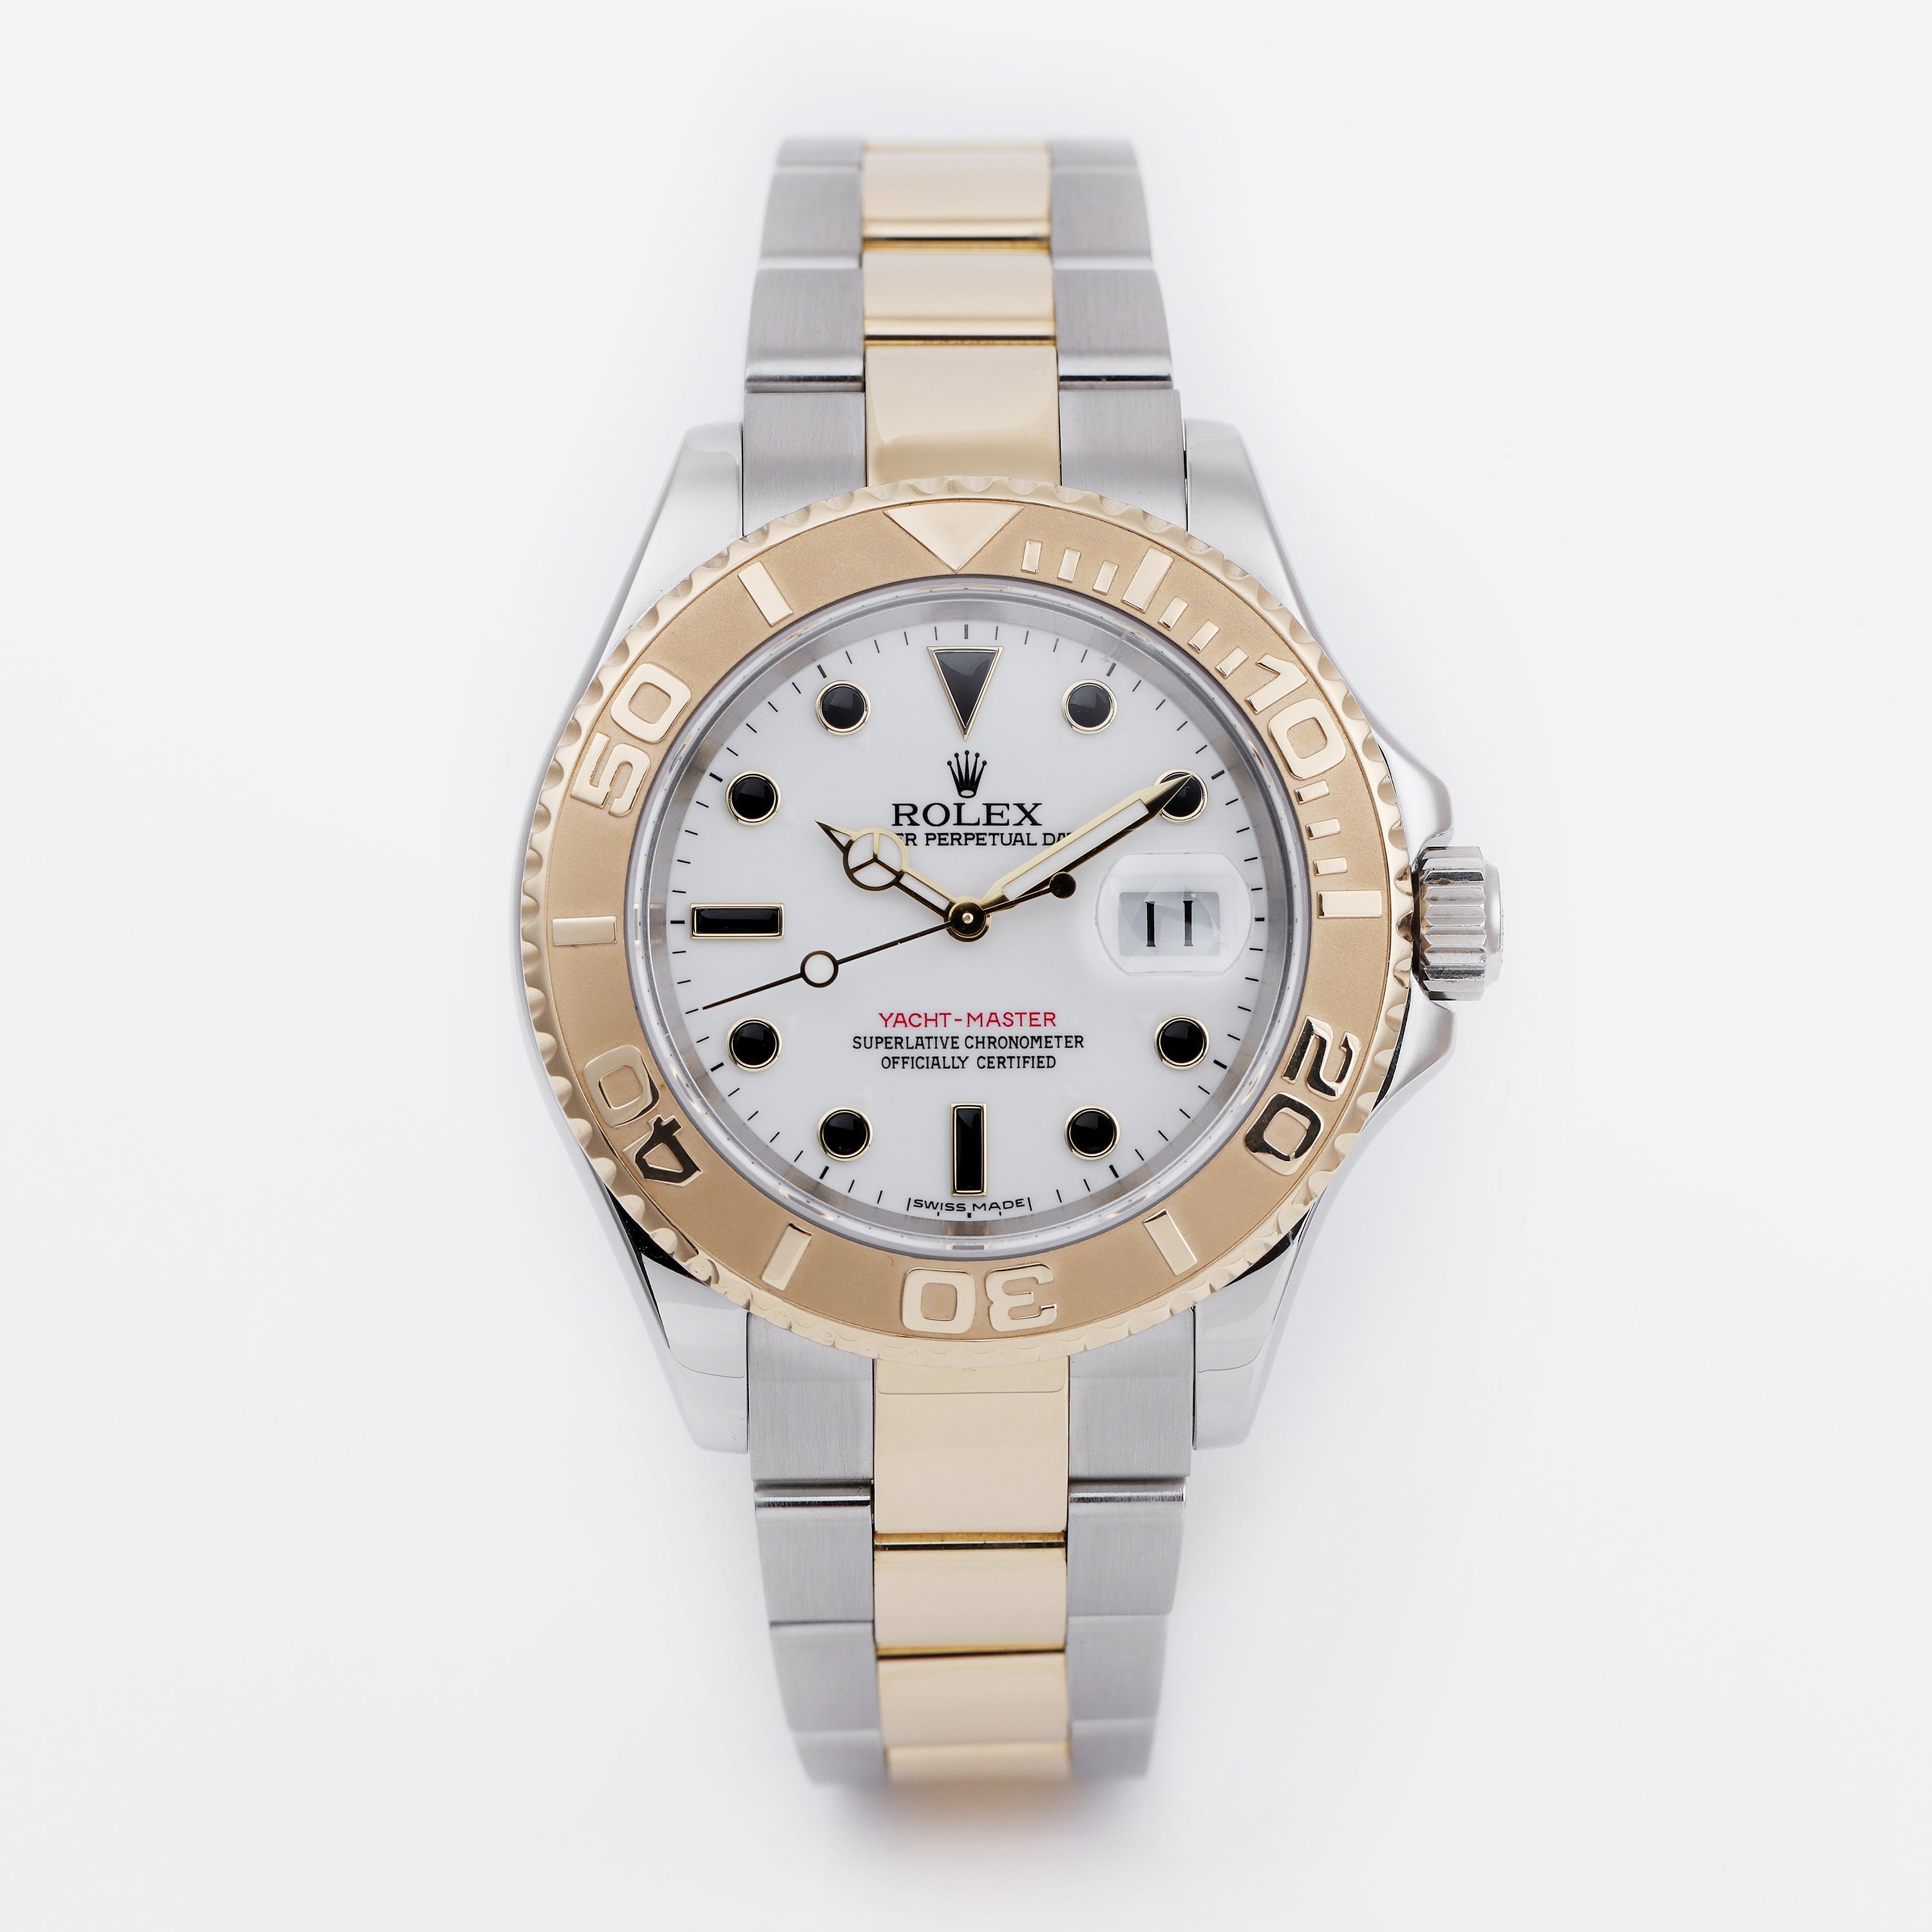 126518ln-0004 Rolex Daytona Yellow Gold on Strap | Essential Watches